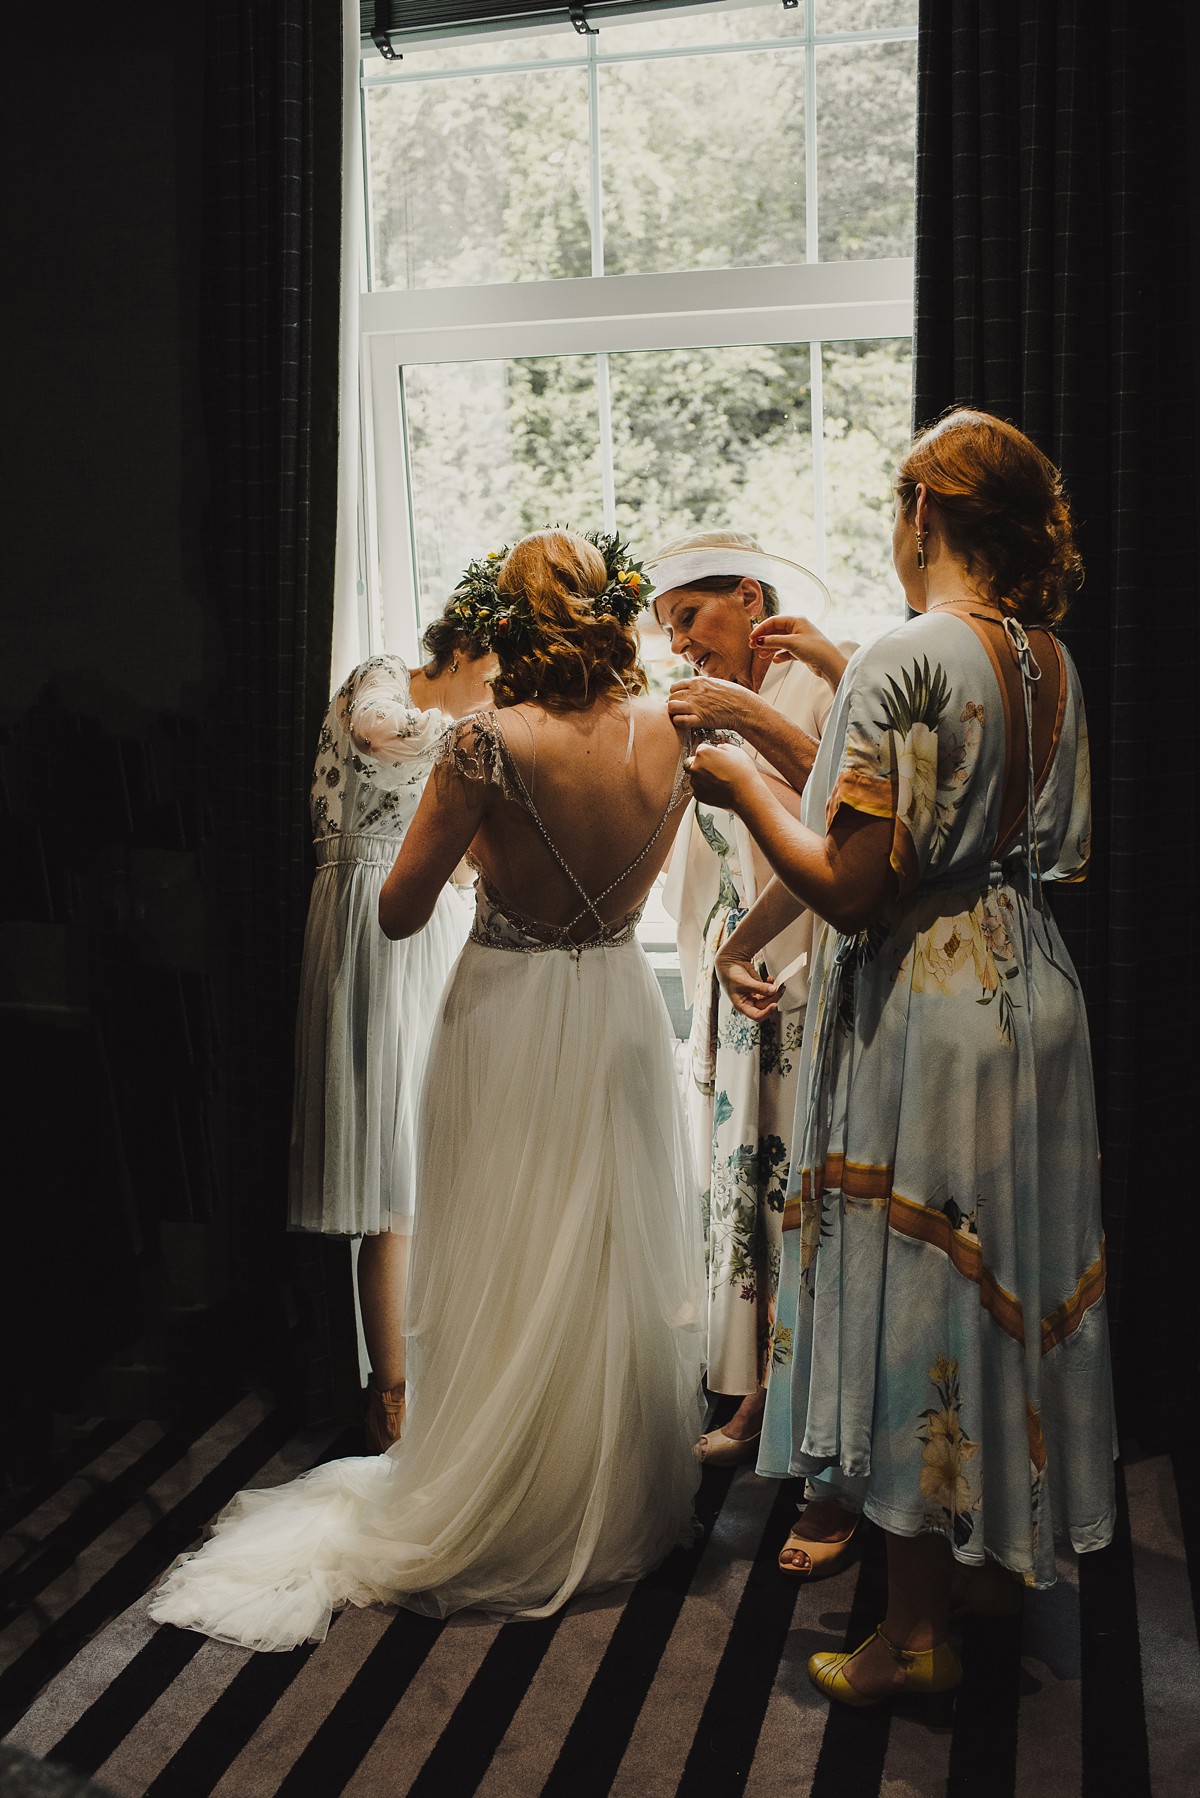 https://www.lovemydress.net/wp-content/uploads/2019/06/Romantic-wedding-Willowby-by-Watters-dress-2.jpg